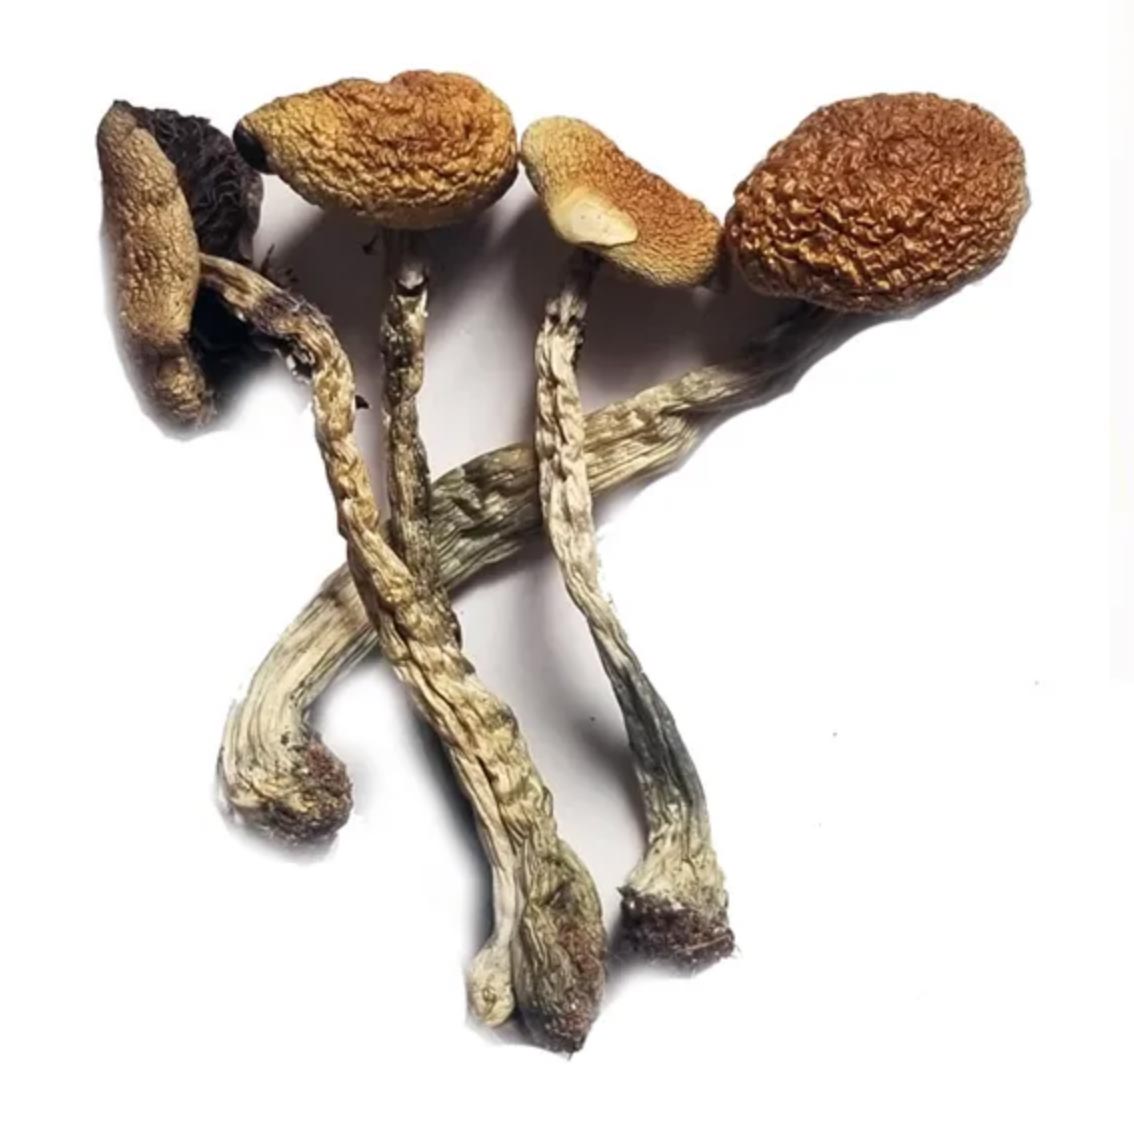 Z-strain magic mushrooms from hotgrass.ca